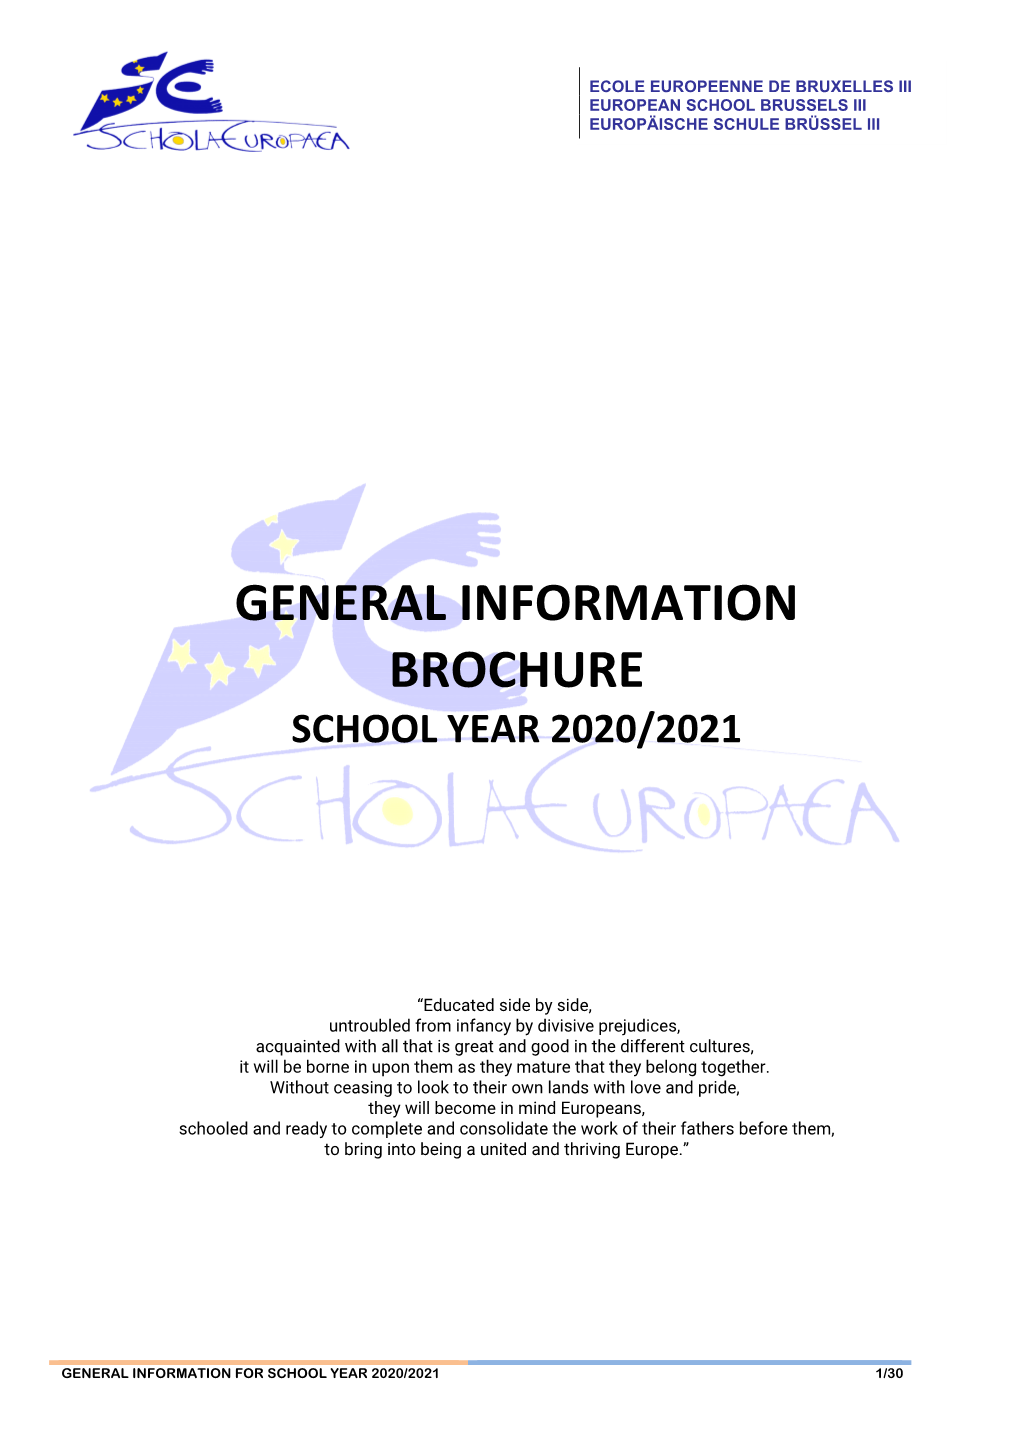 EEB3-General Information Brochure 2020-2021